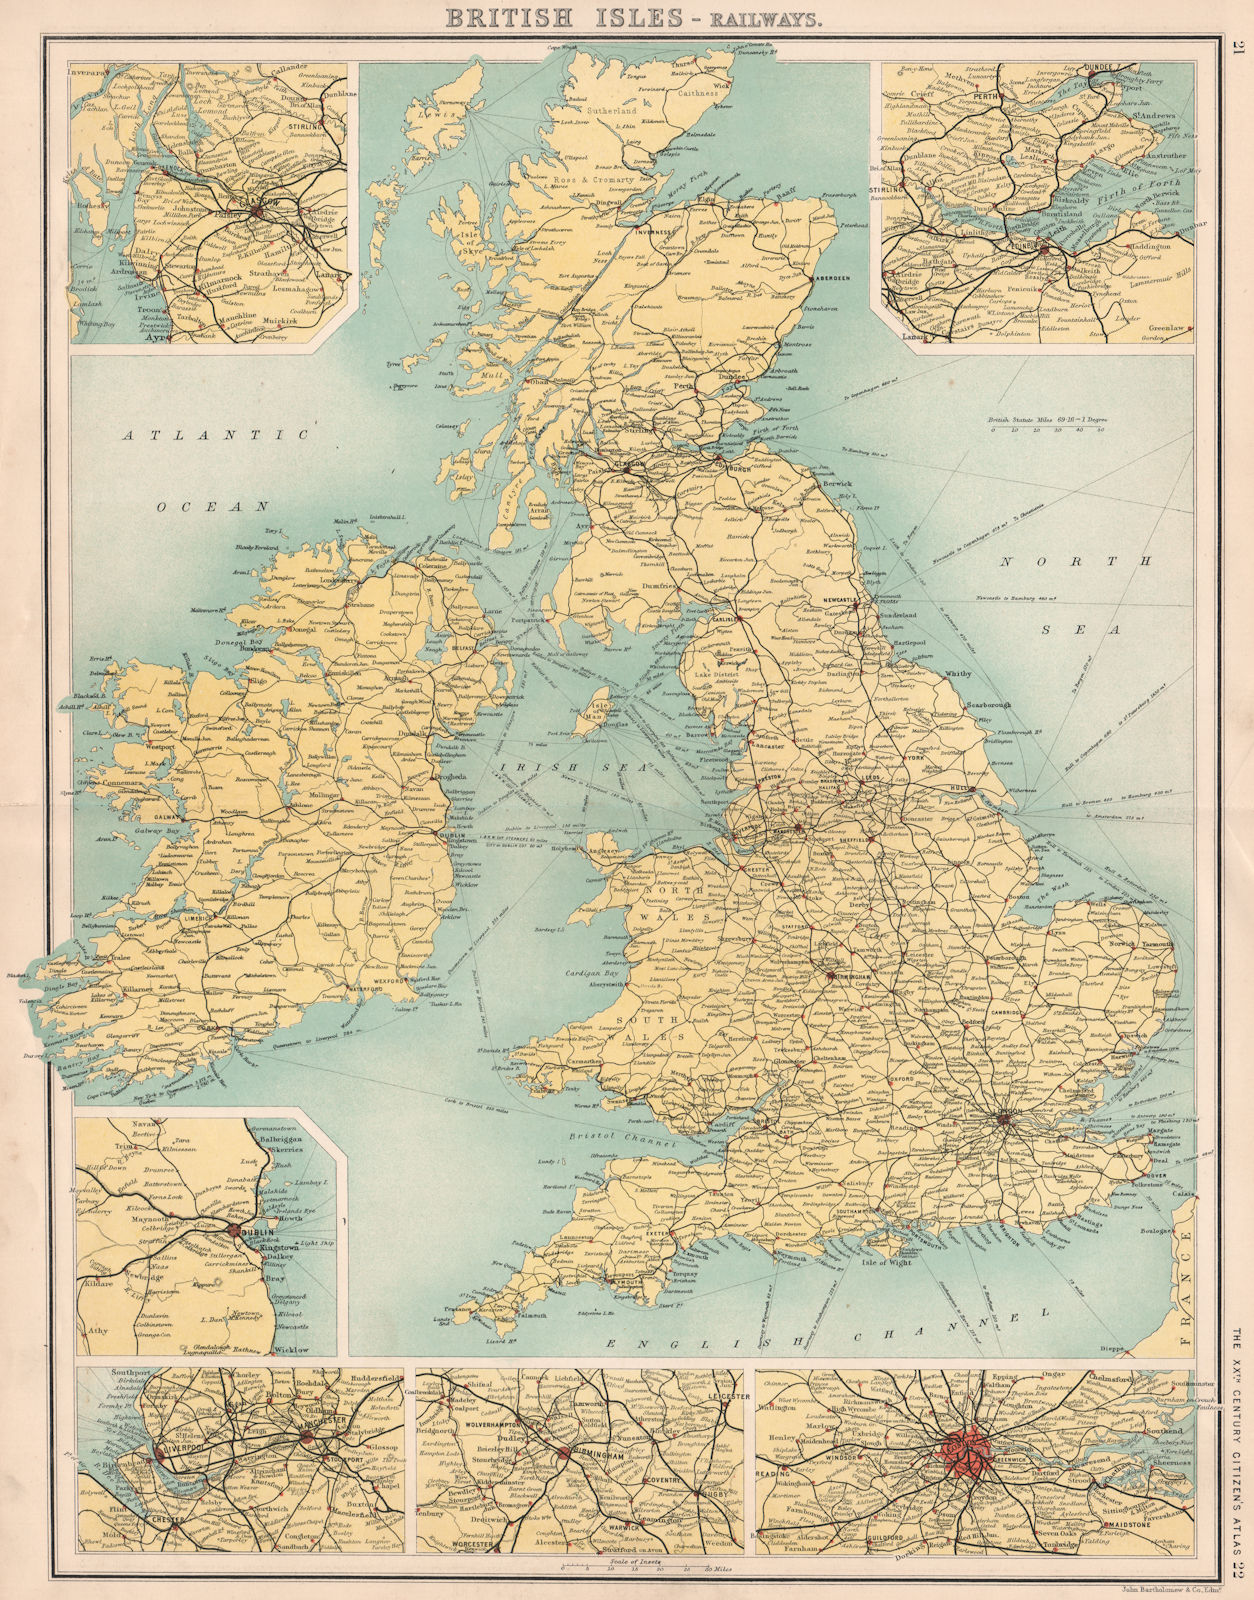 BRITISH ISLES RAILWAYS. Glasgow Edinburgh Manchester Birmingham London 1901 map